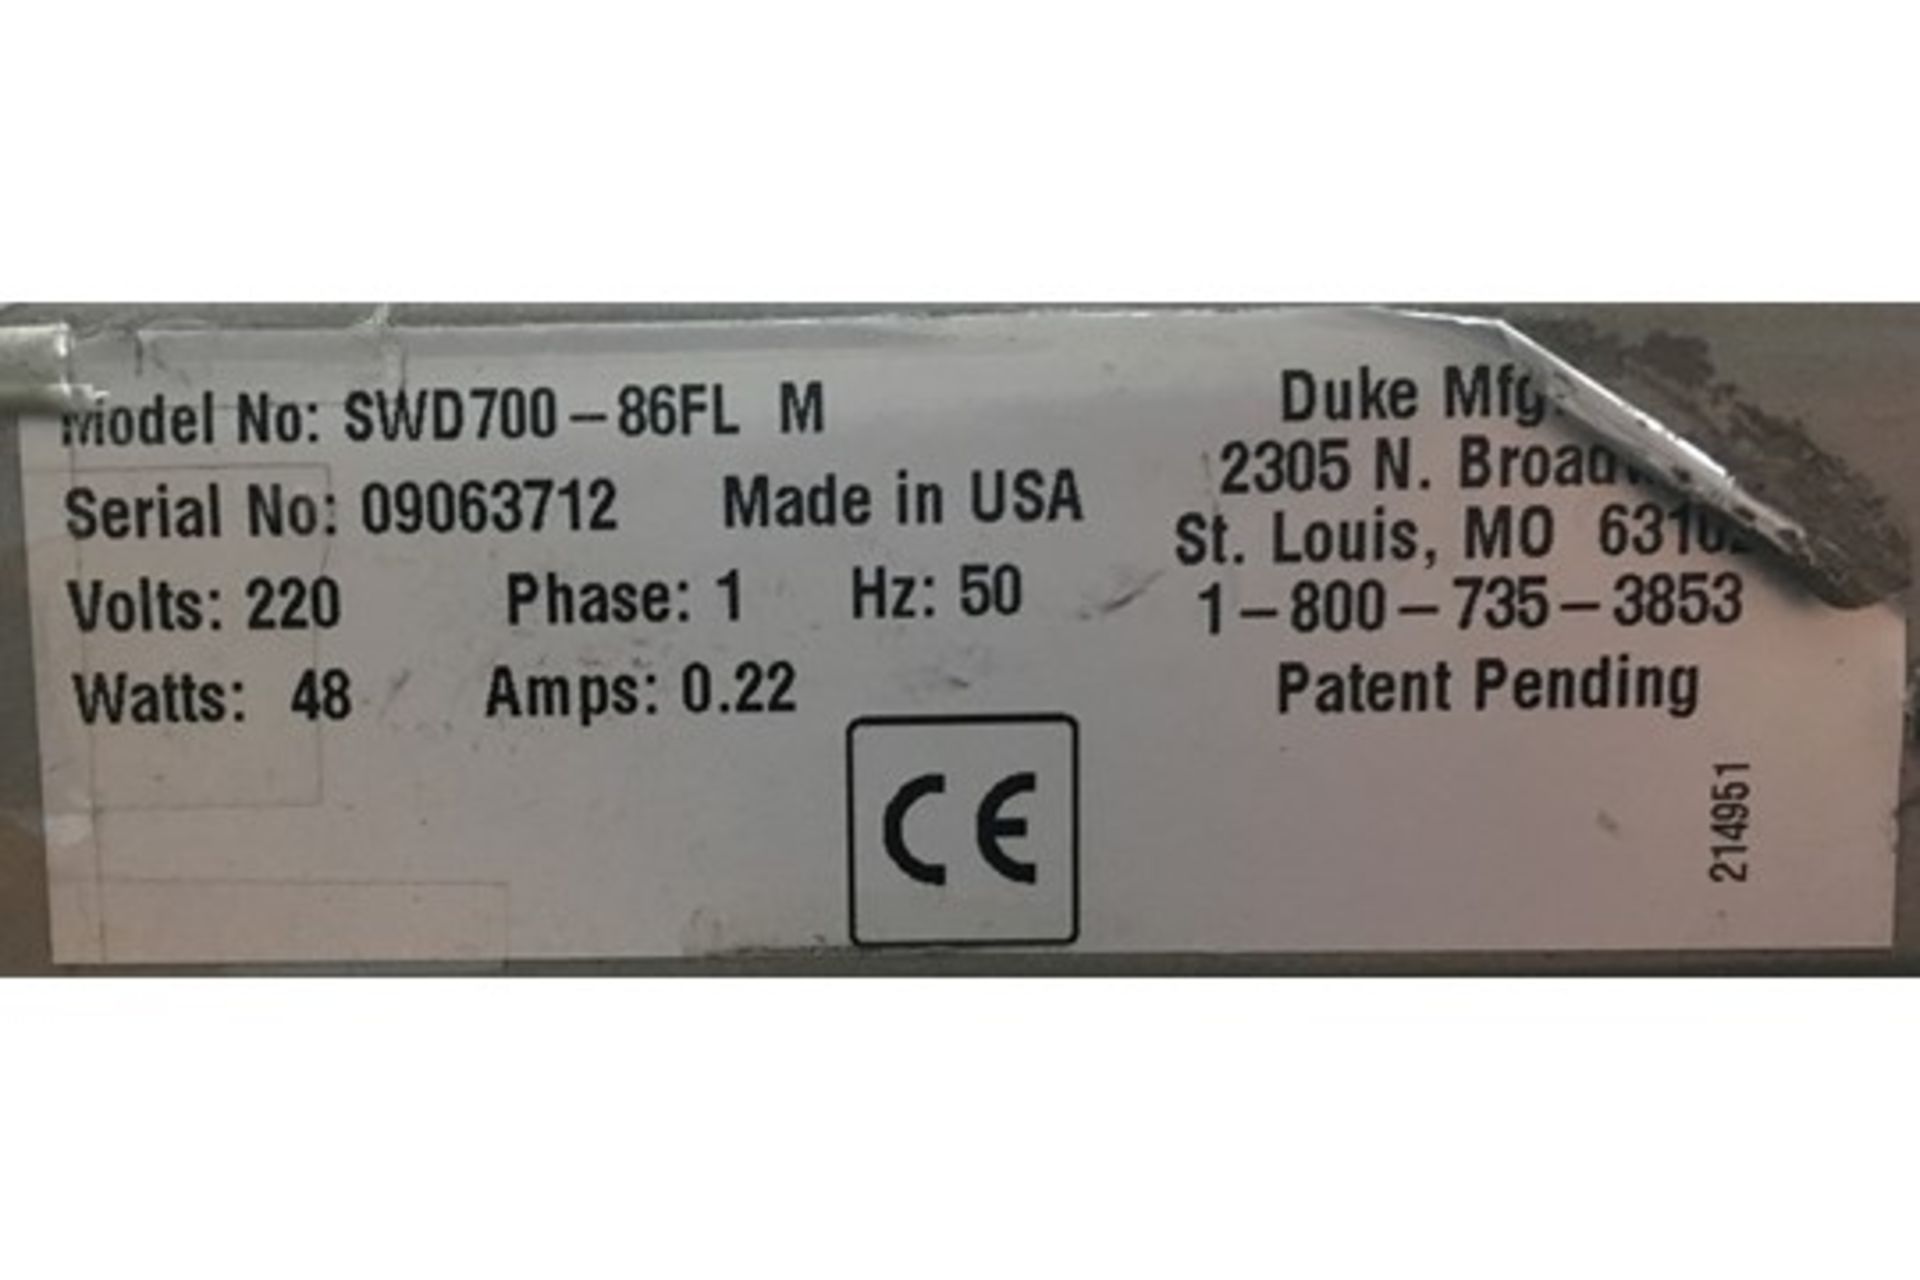 Duke SWD700-86FL M Chilled & Display Unit - Image 6 of 7